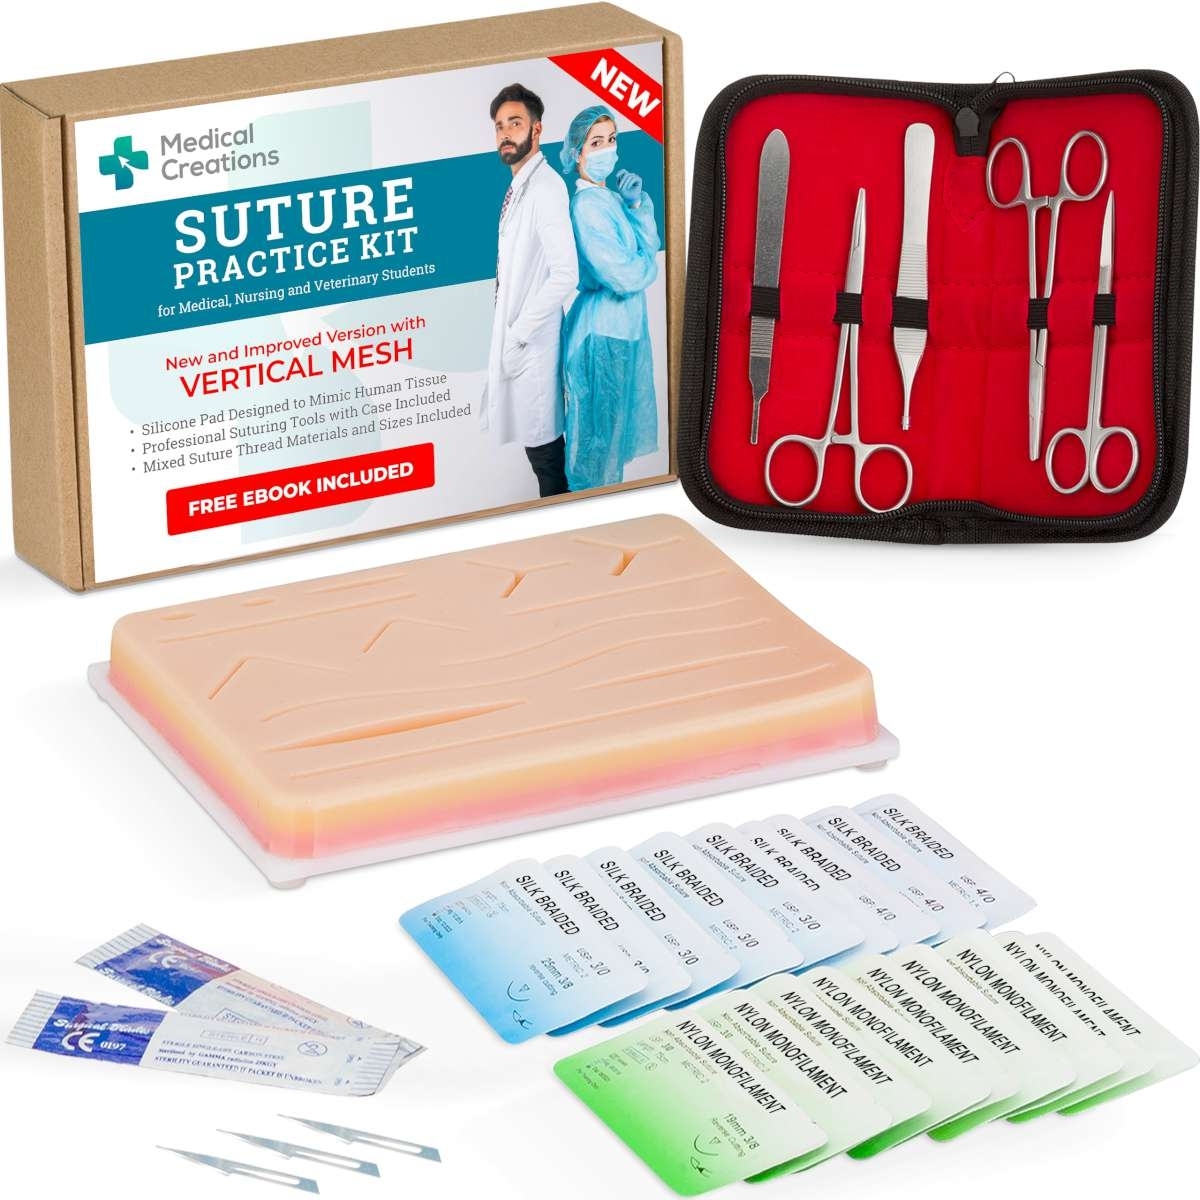 Kit de Práctica de Suturas Medical Creations